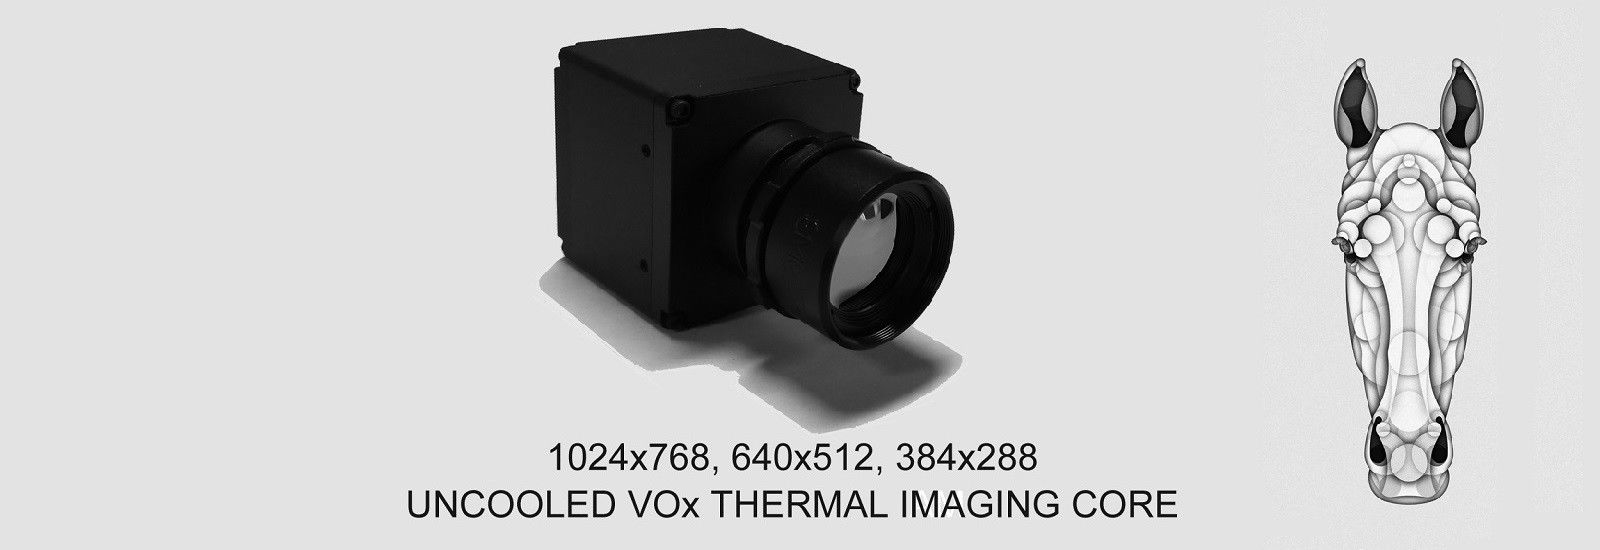 kwaliteit thermische cameramodule fabriek